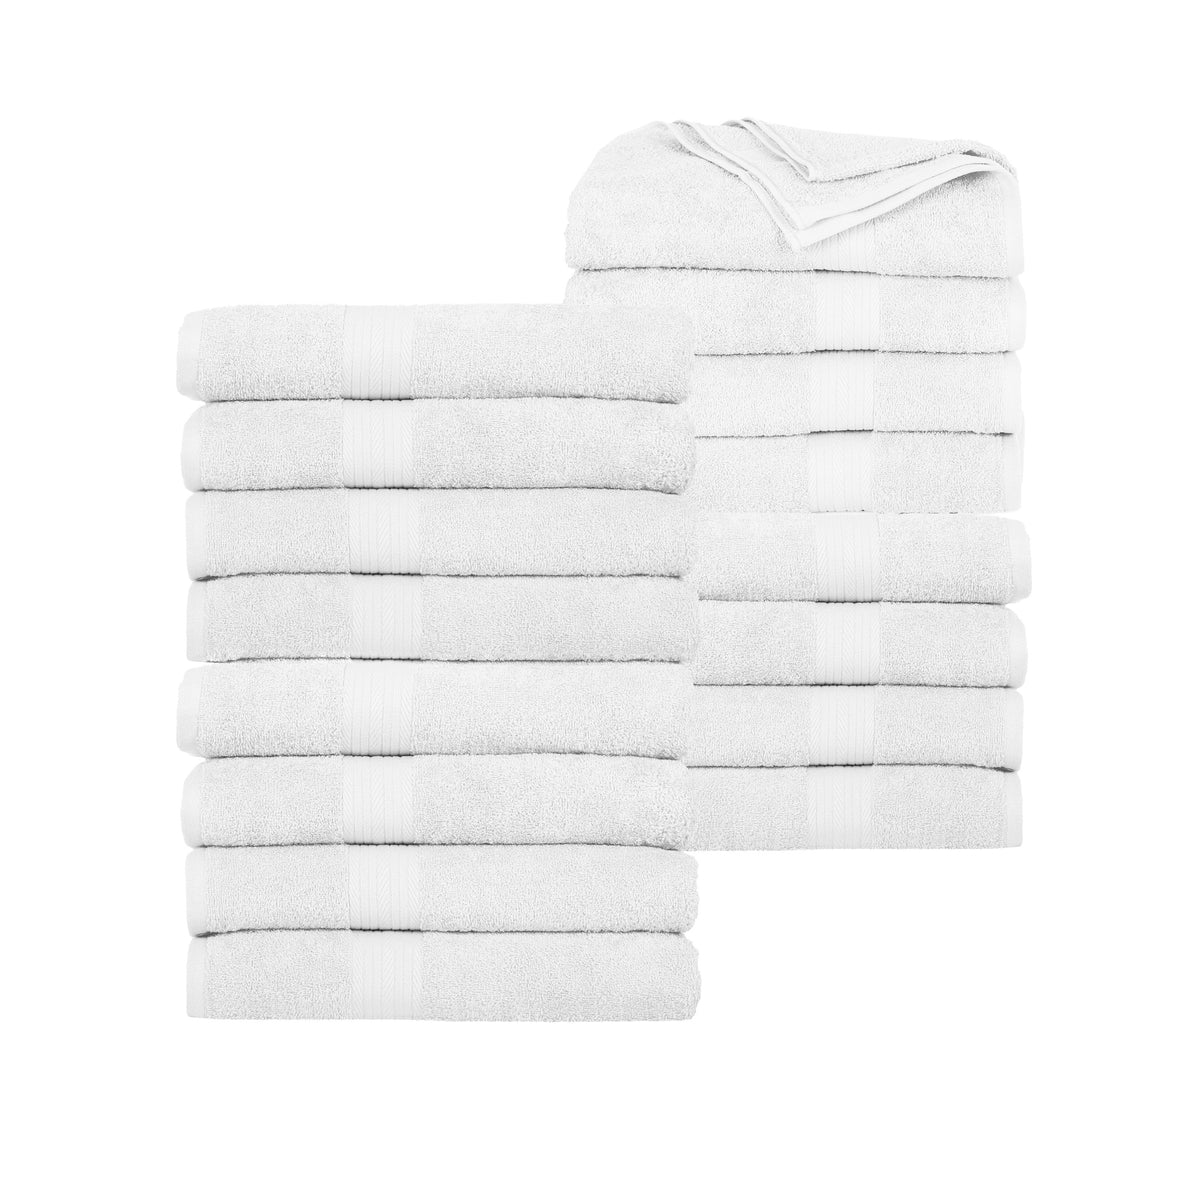 Bath Towel for Bathroom - Set of 16